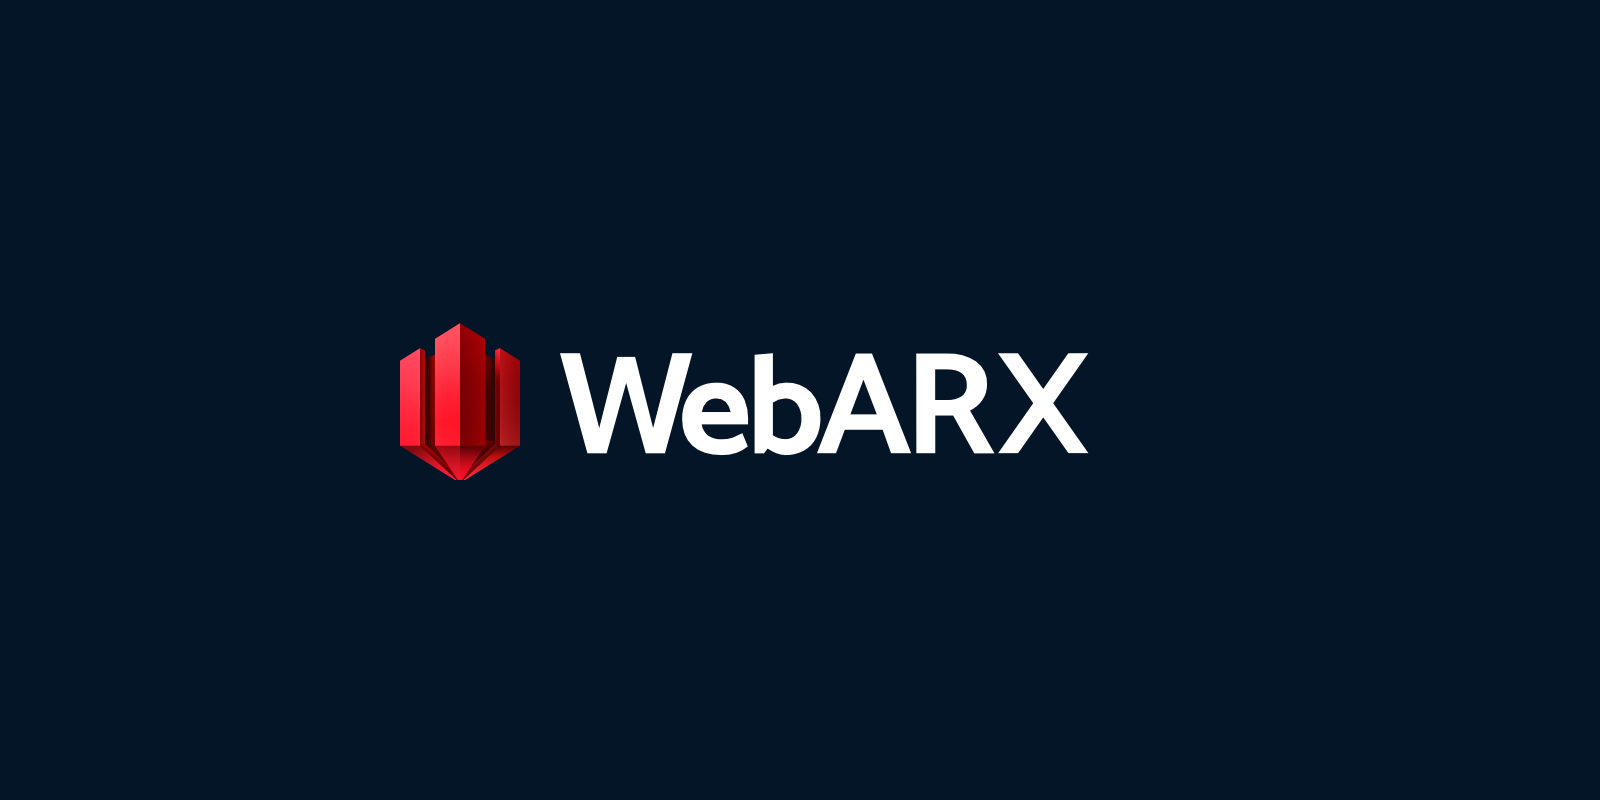 WebArx